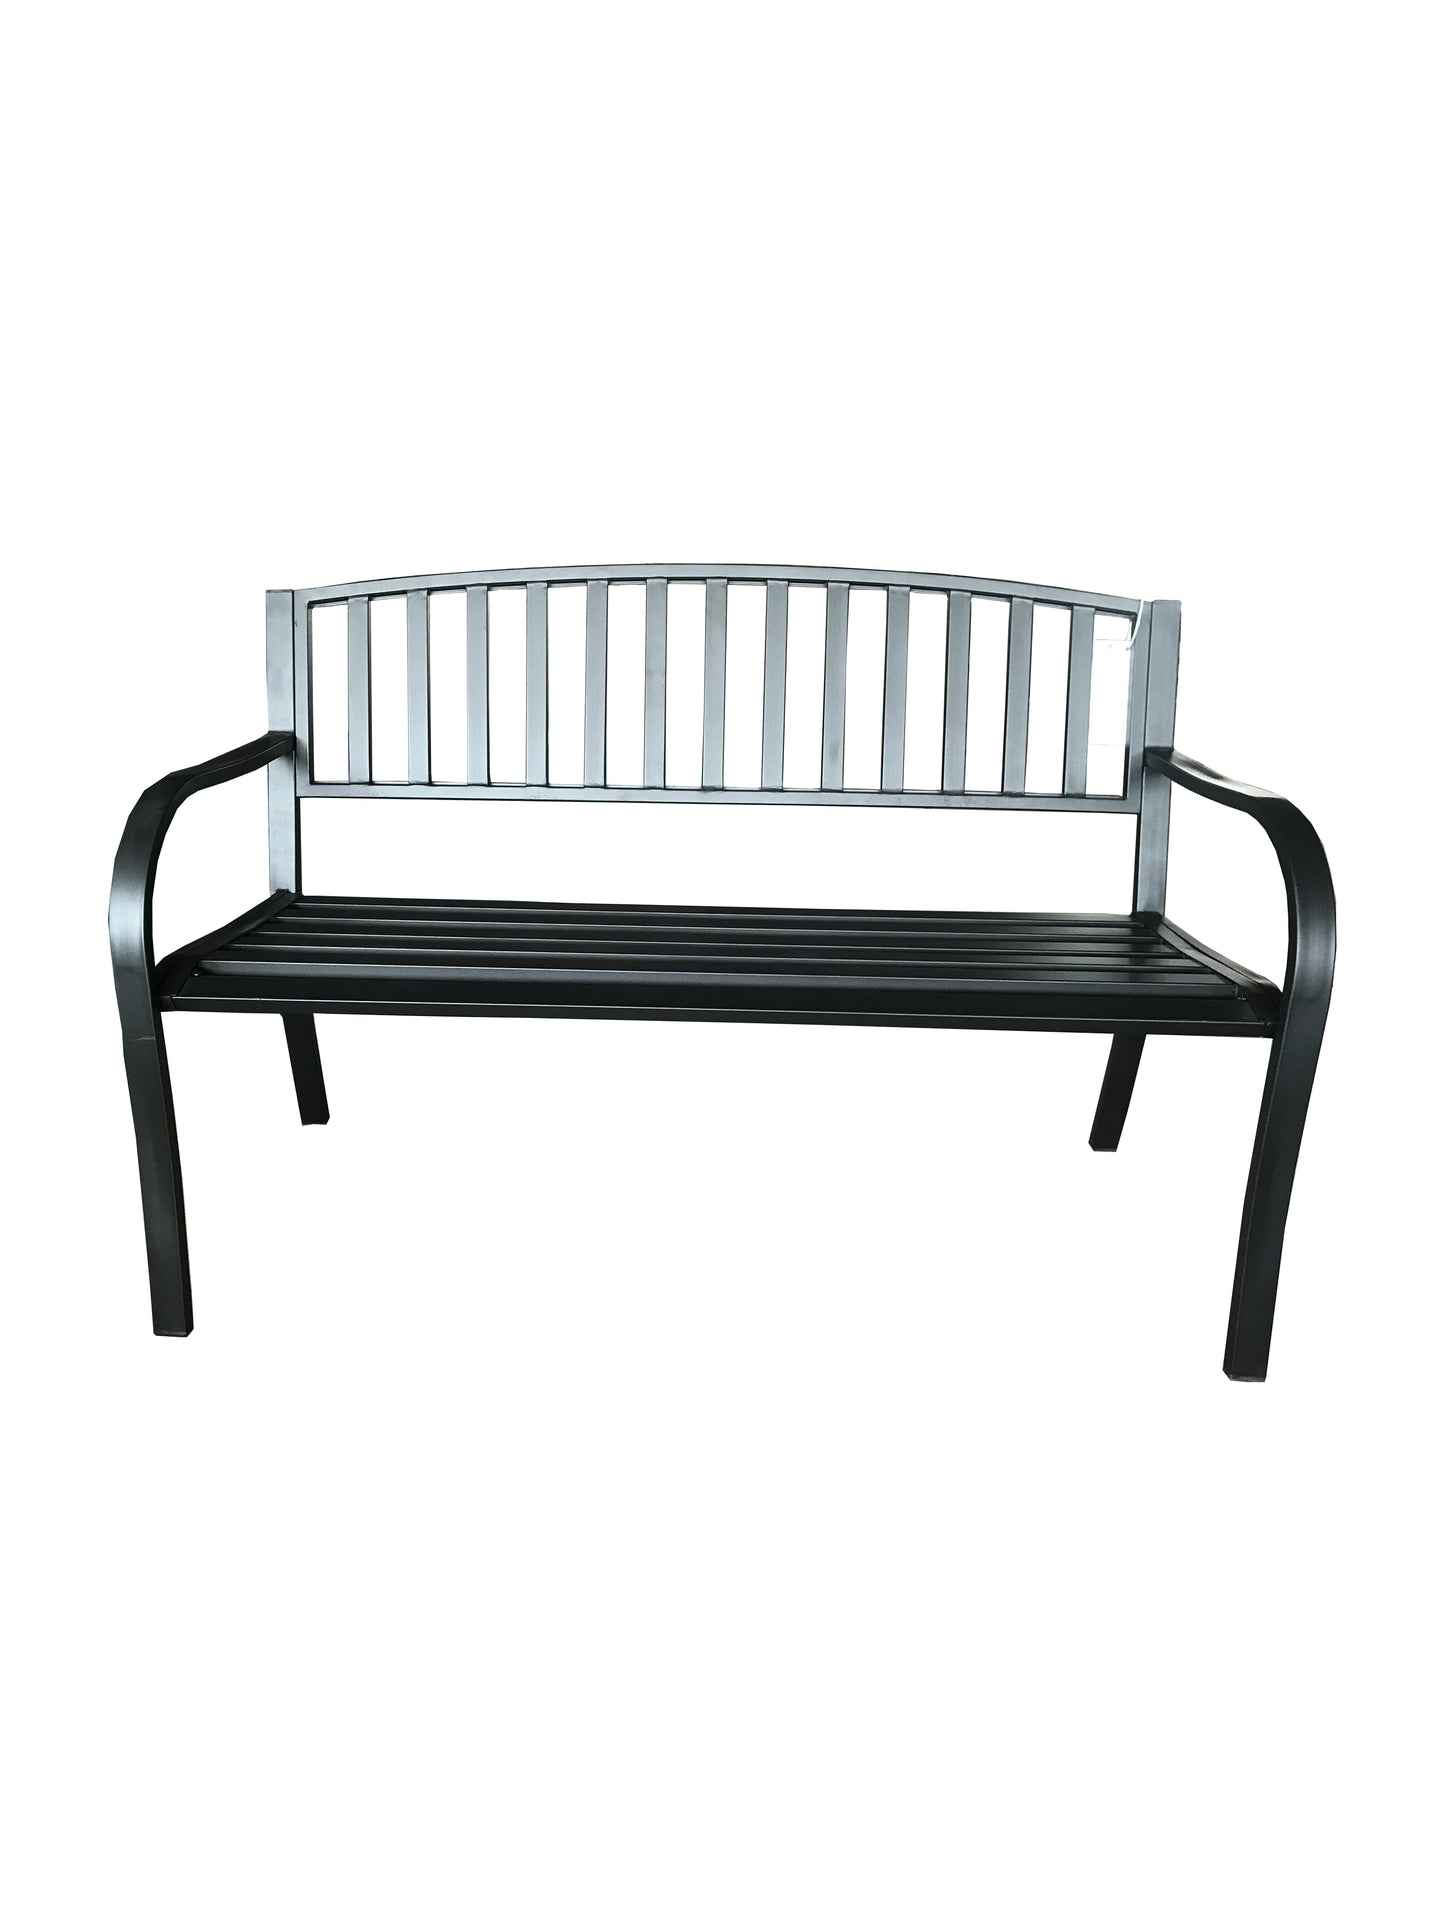 Steel Bench Chair 63.5*85Cm